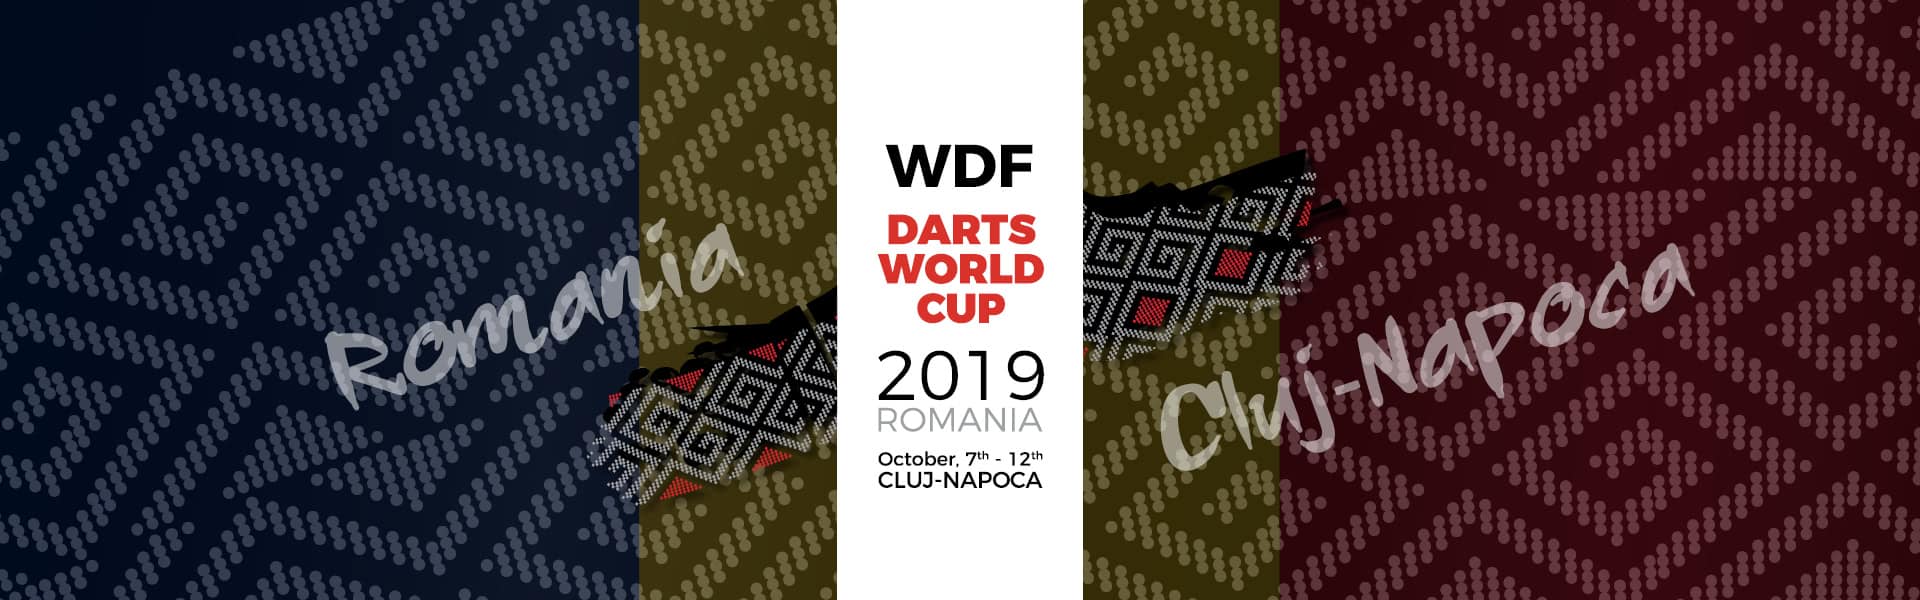 WDF World Cup 2019